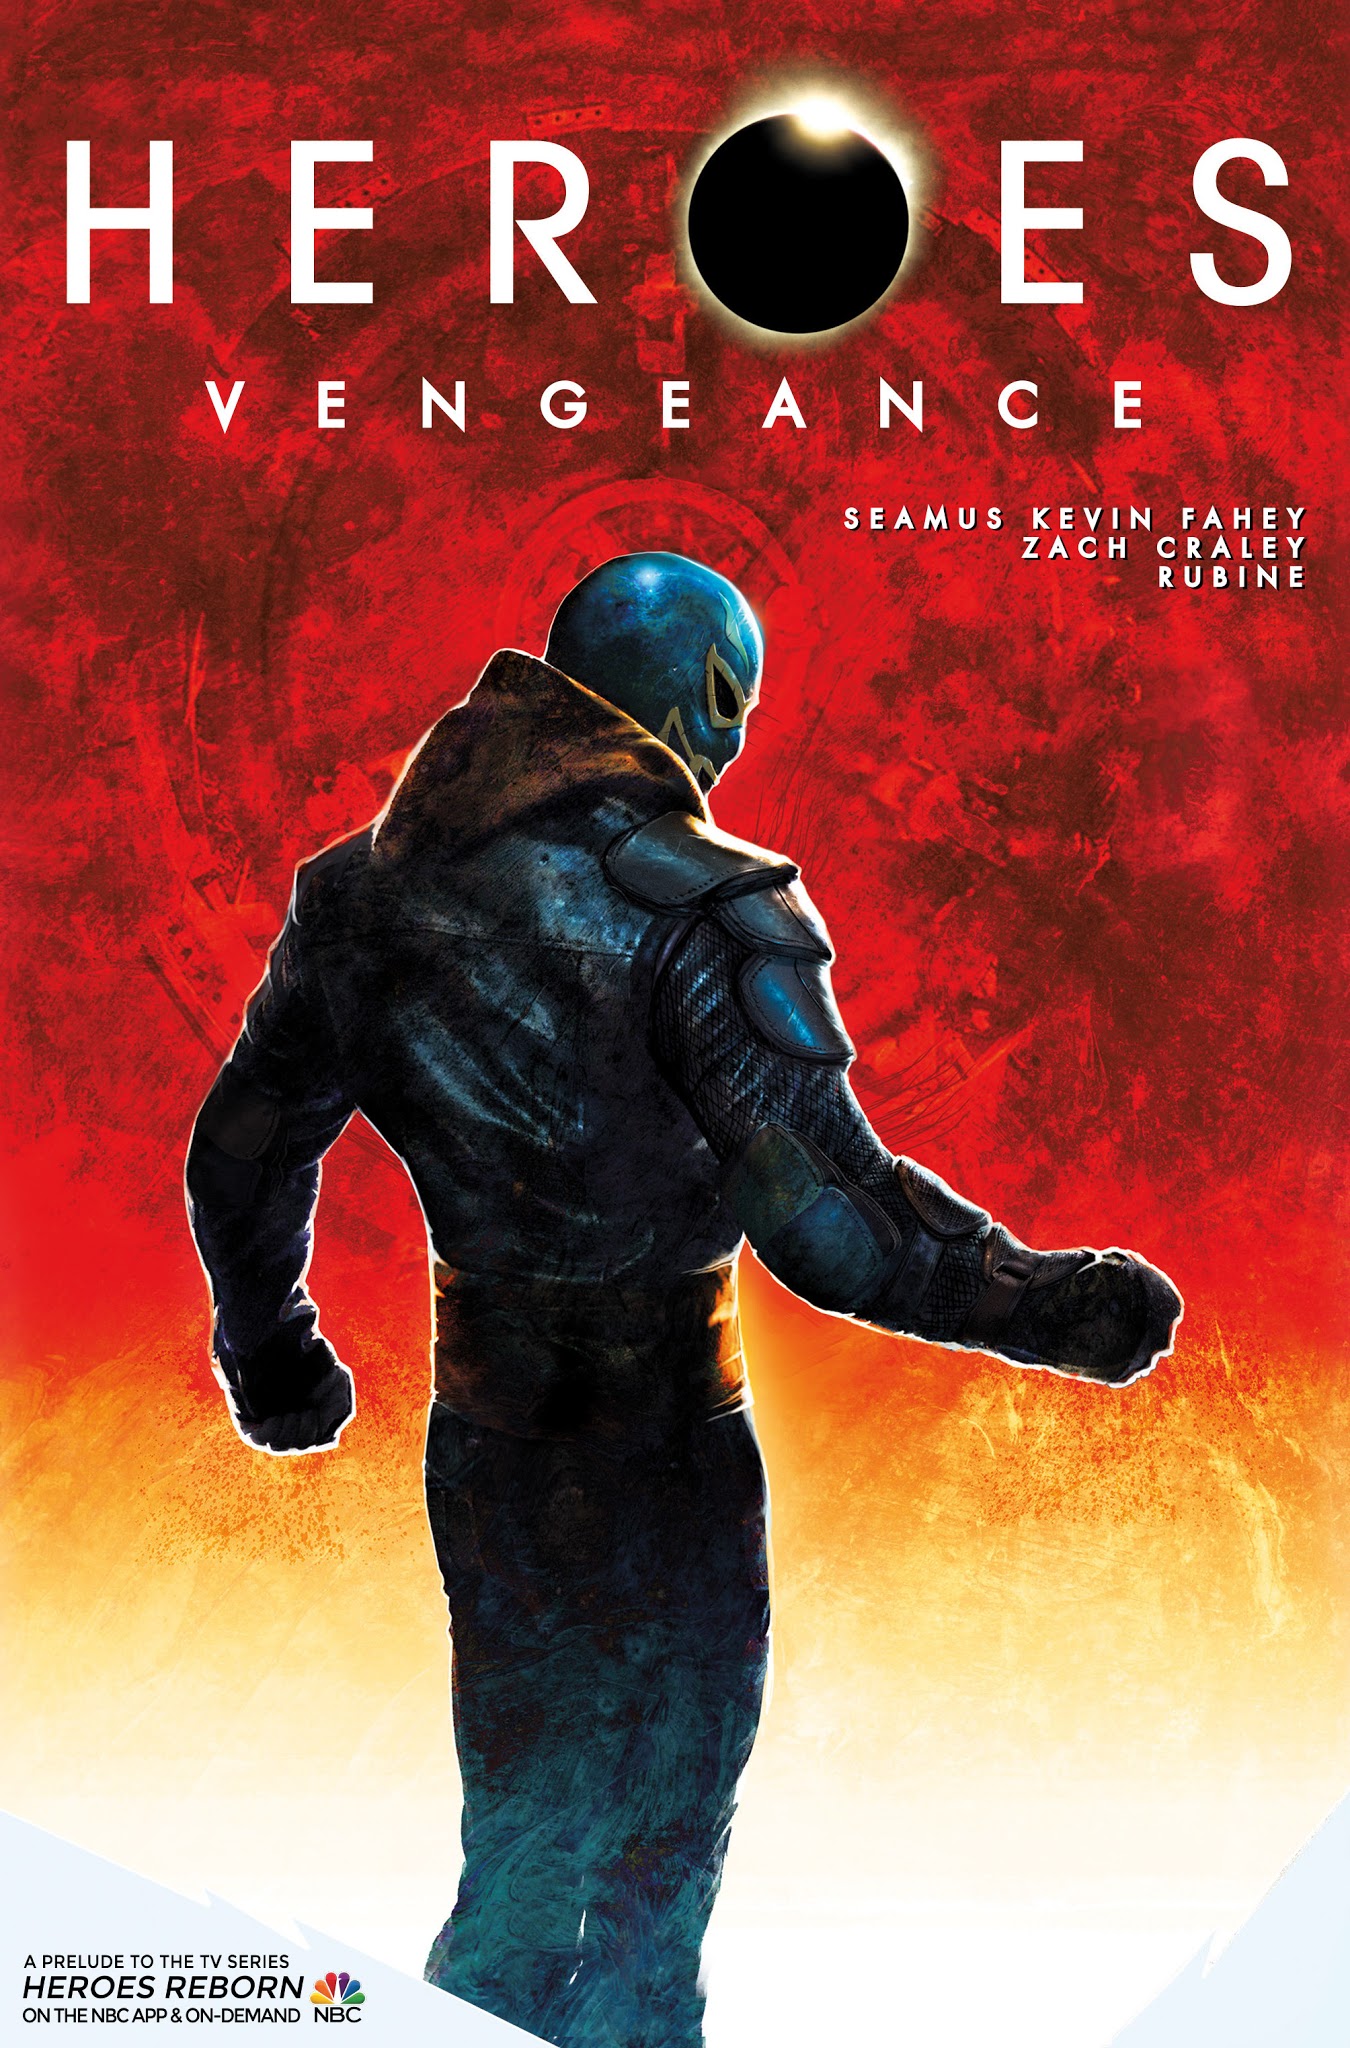 Read online Heroes: Vengeance comic -  Issue #4 - 29